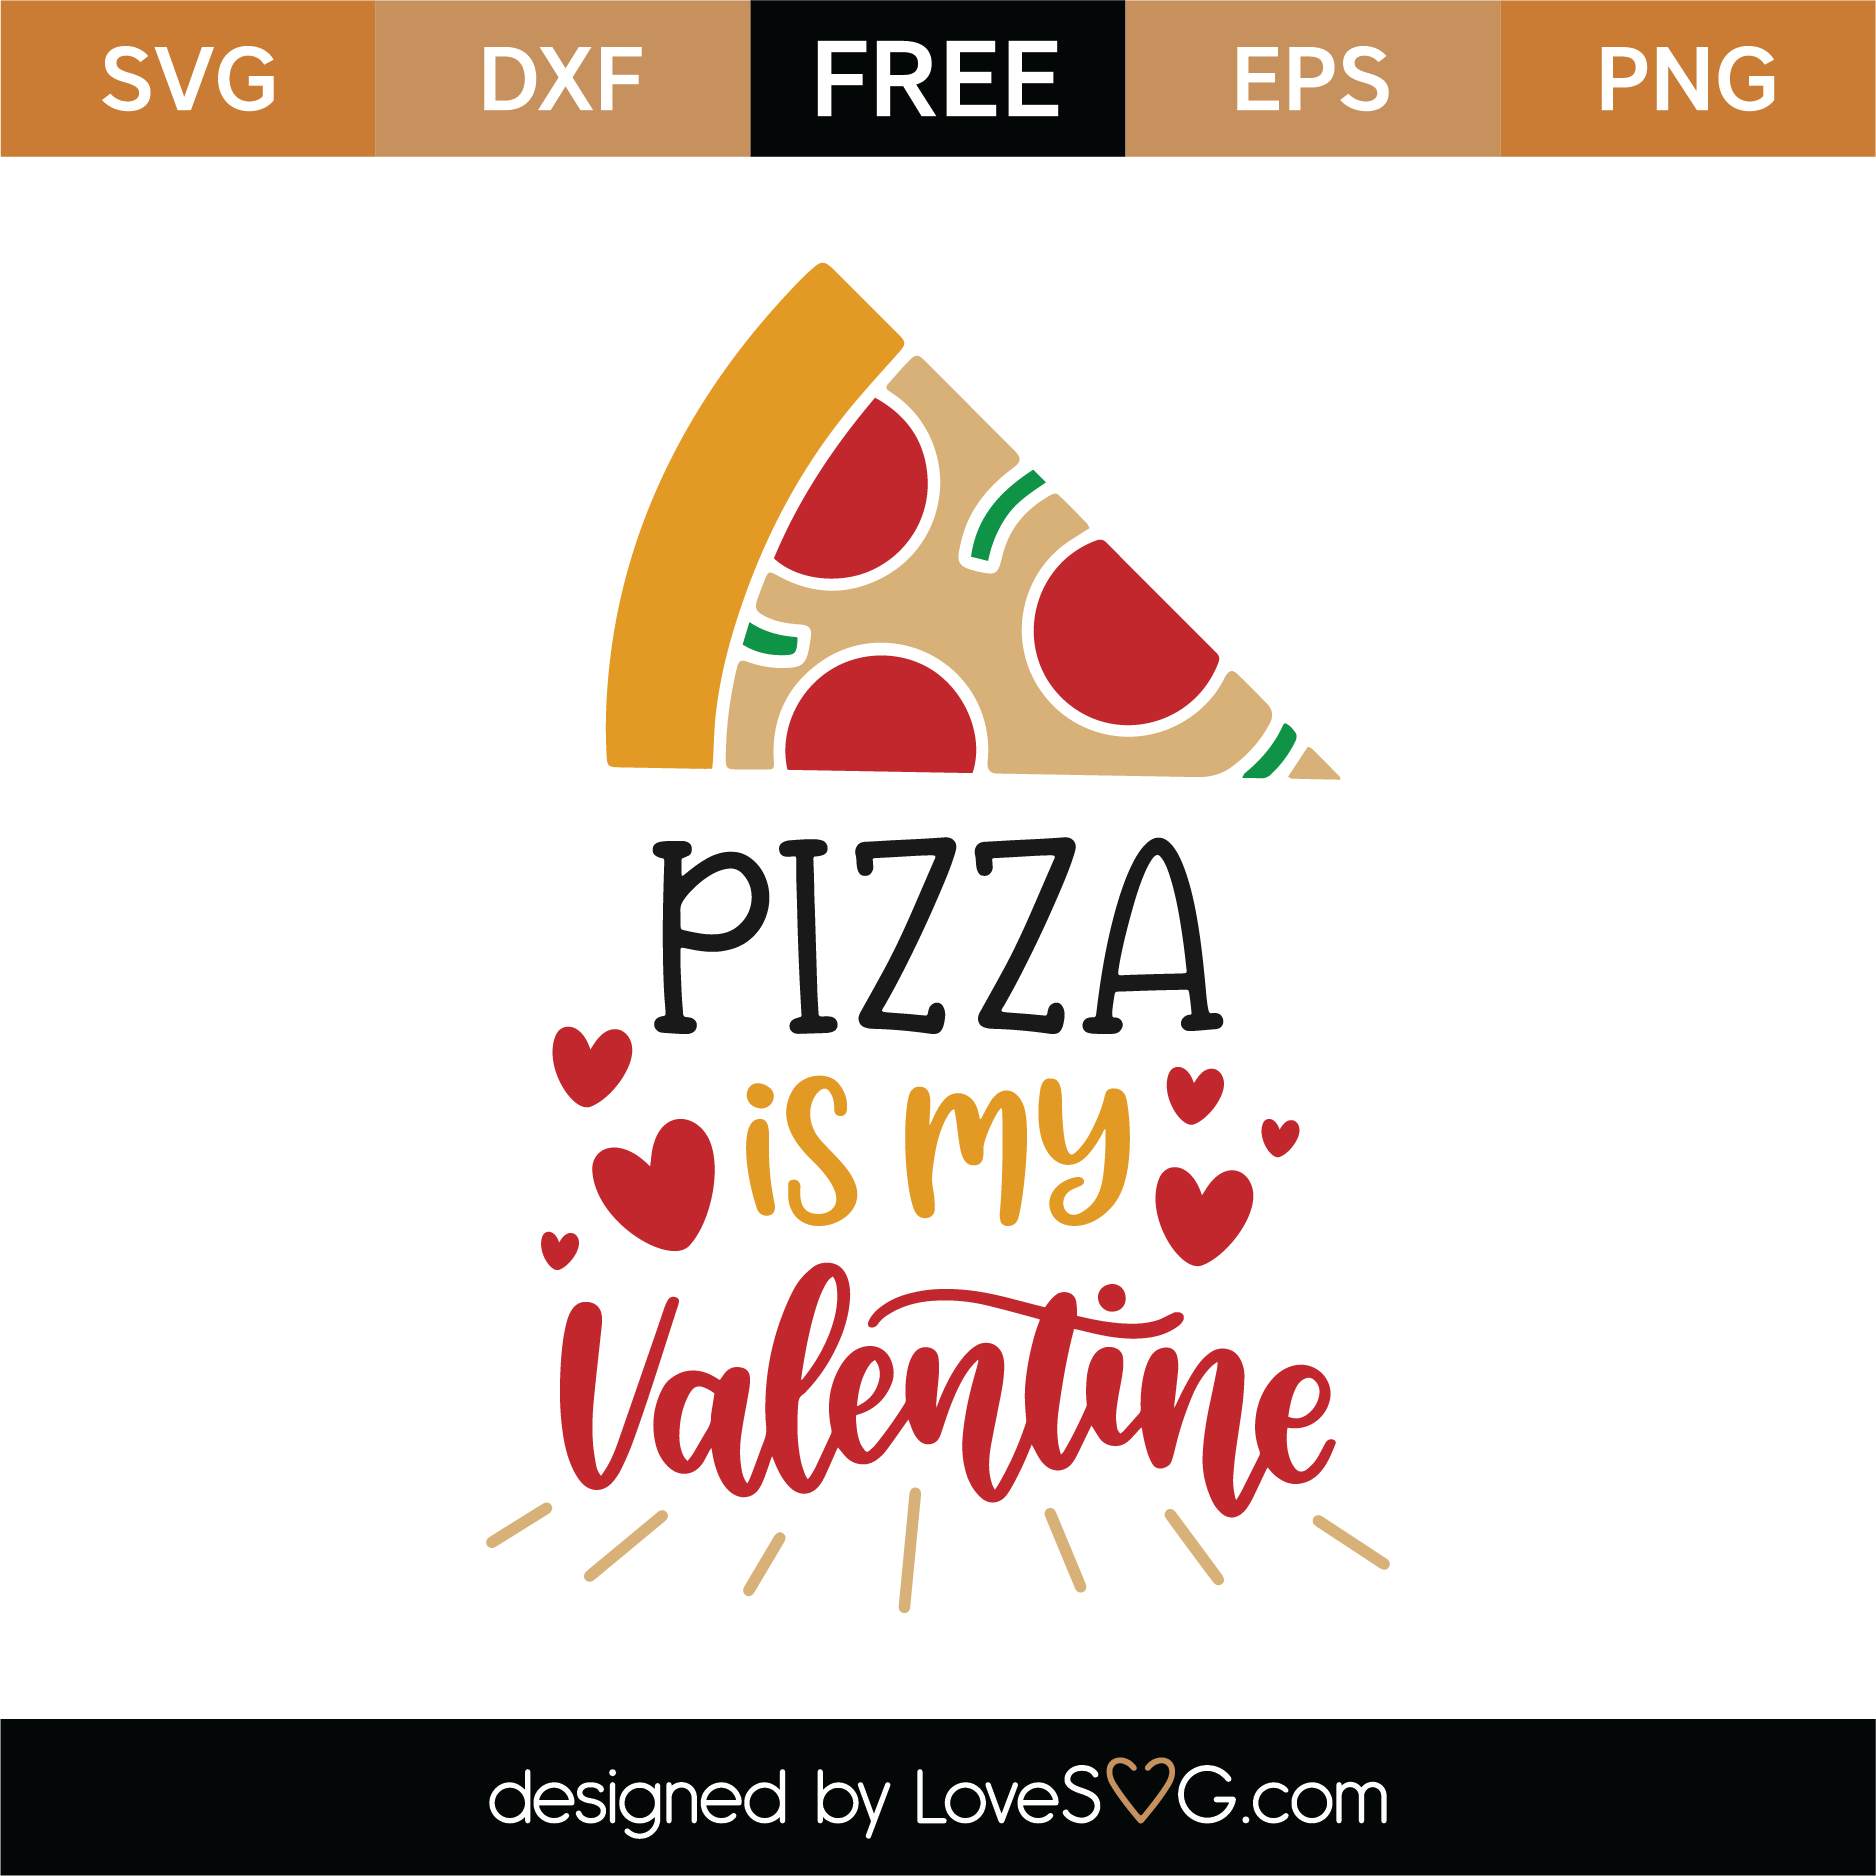 Download Free Pizza Is My Valentine SVG Cut File | Lovesvg.com